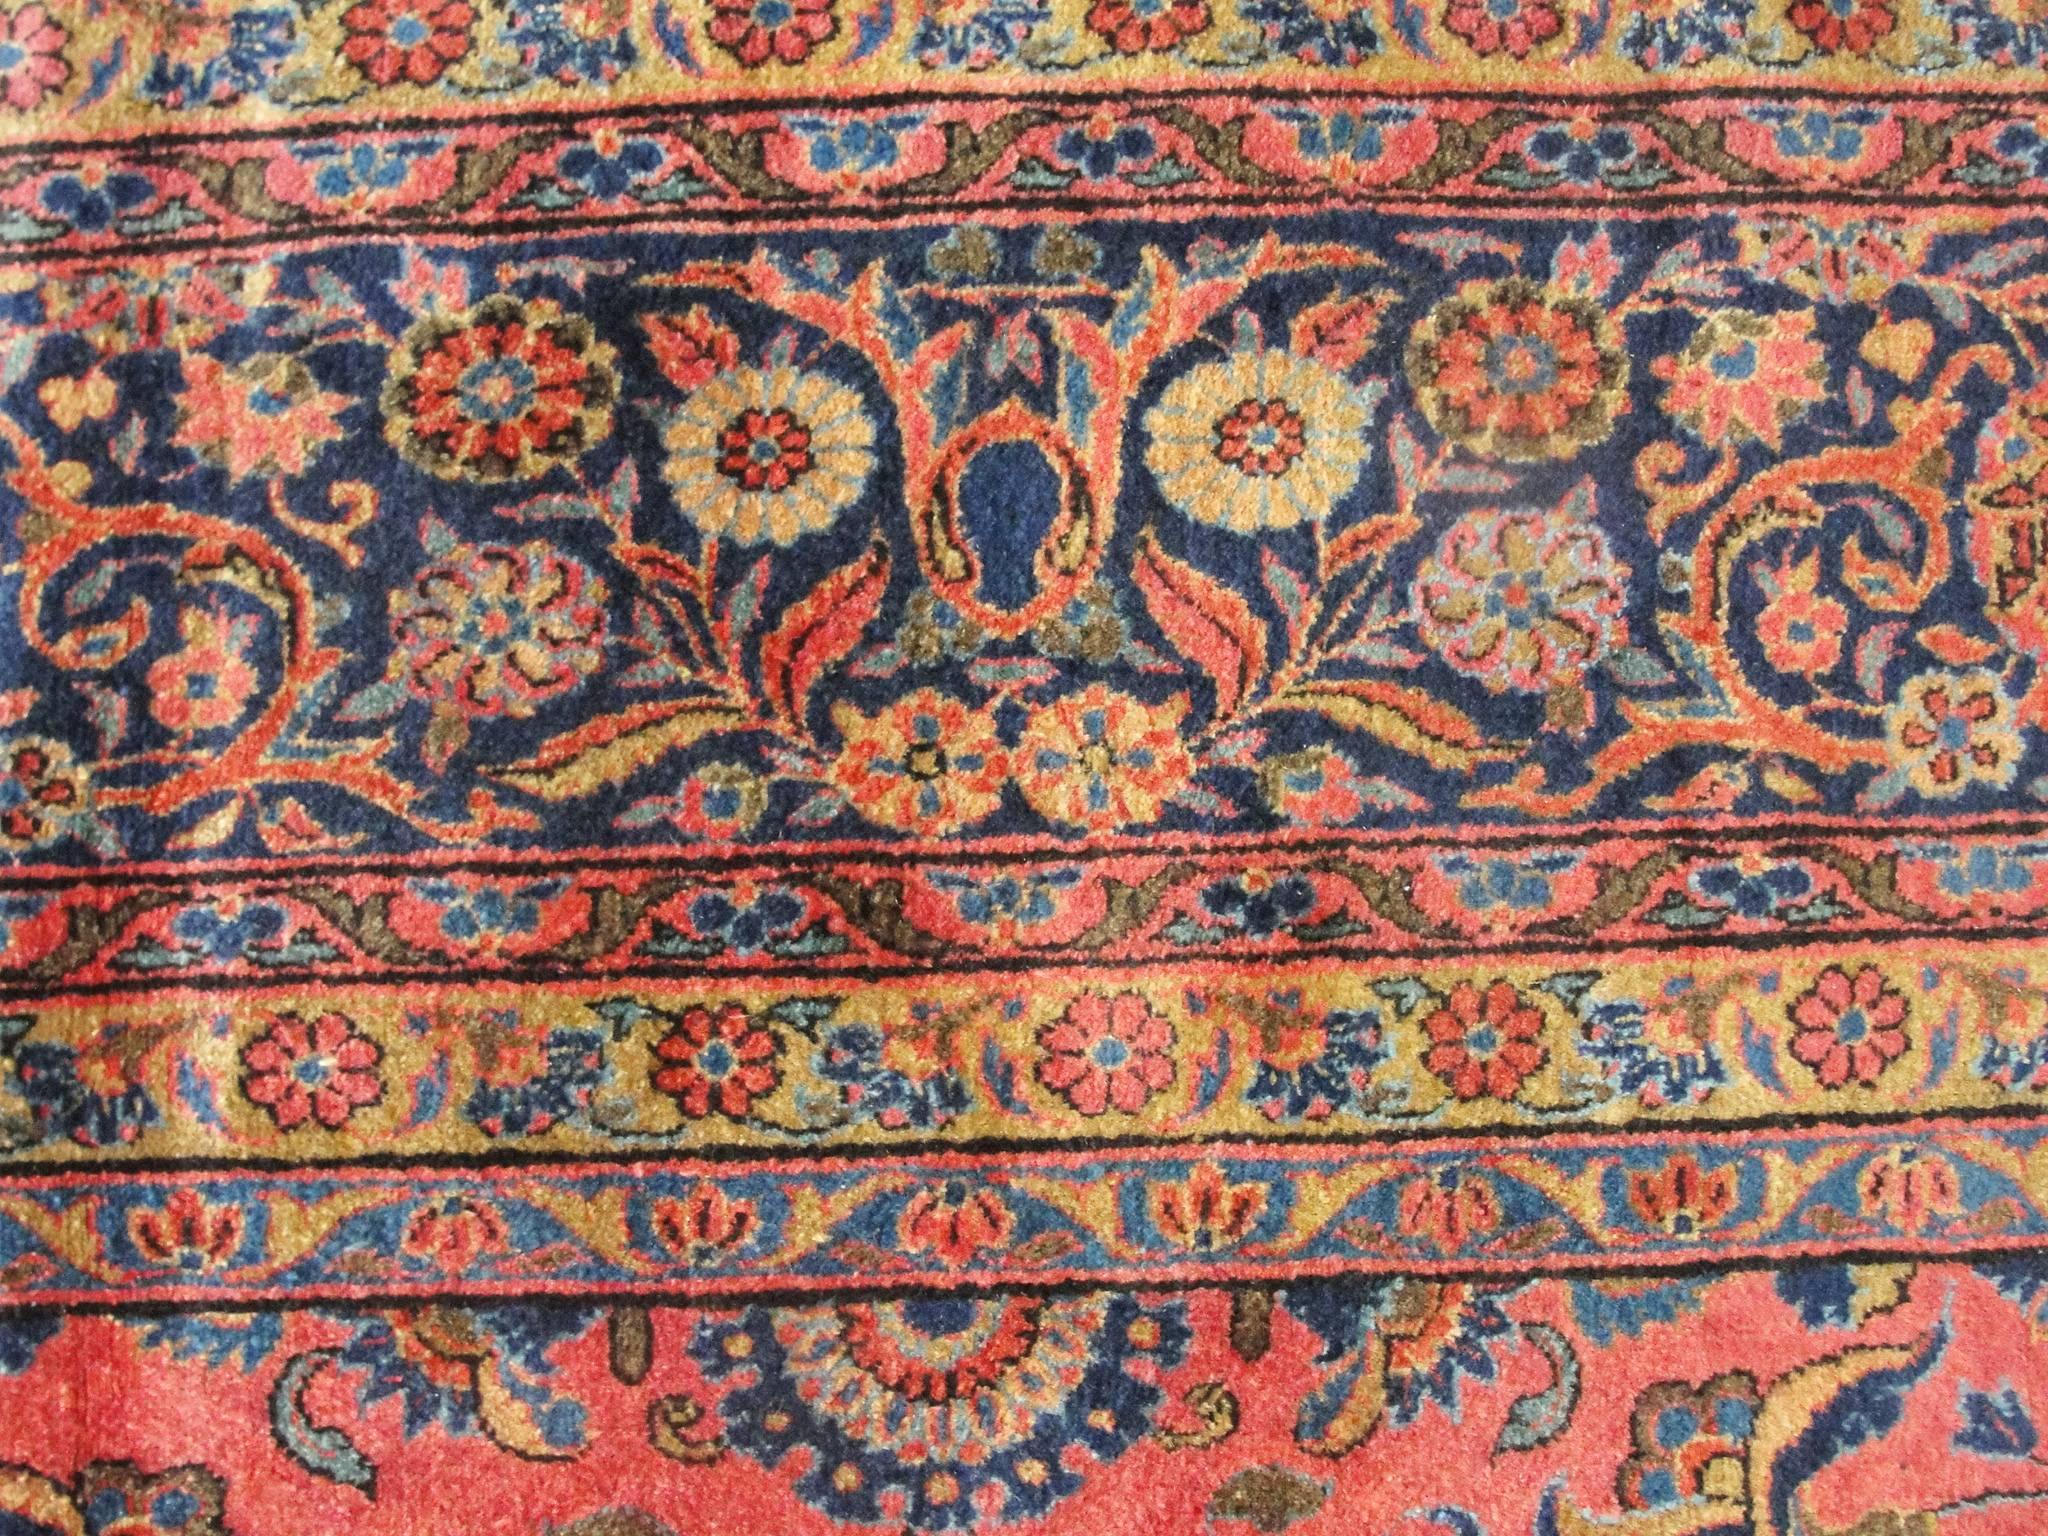  Antique Persian Manchester Kashan Carpet, Signed 1